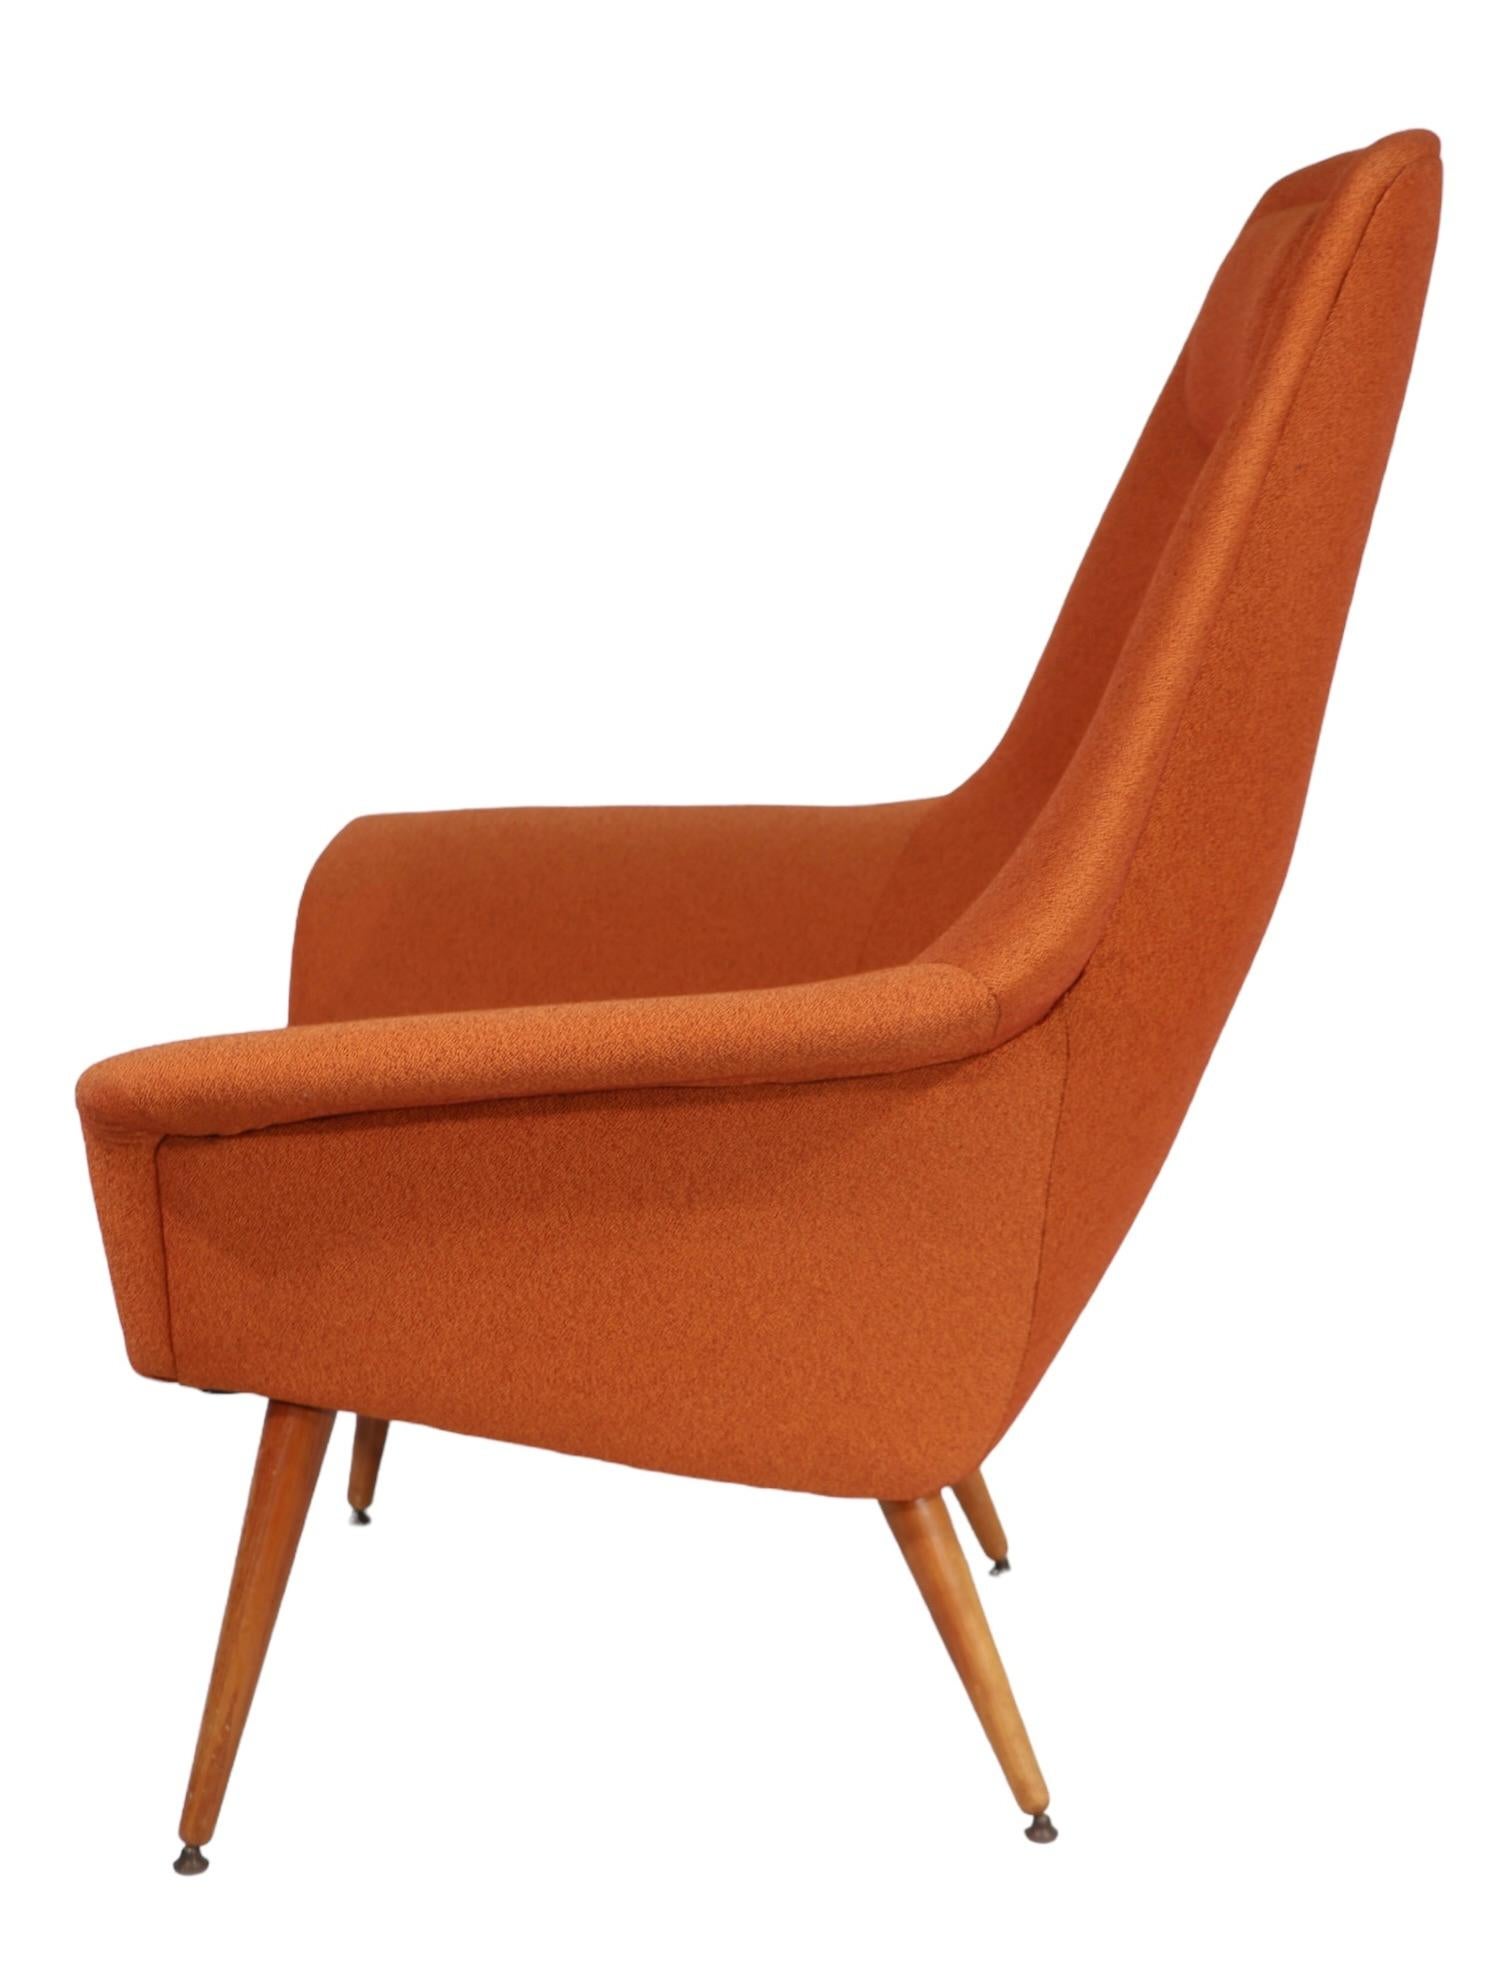  Torbjorn Afdal Bjarne Hansen Butterfly Chair Made in Norway c 1950's For Sale 3